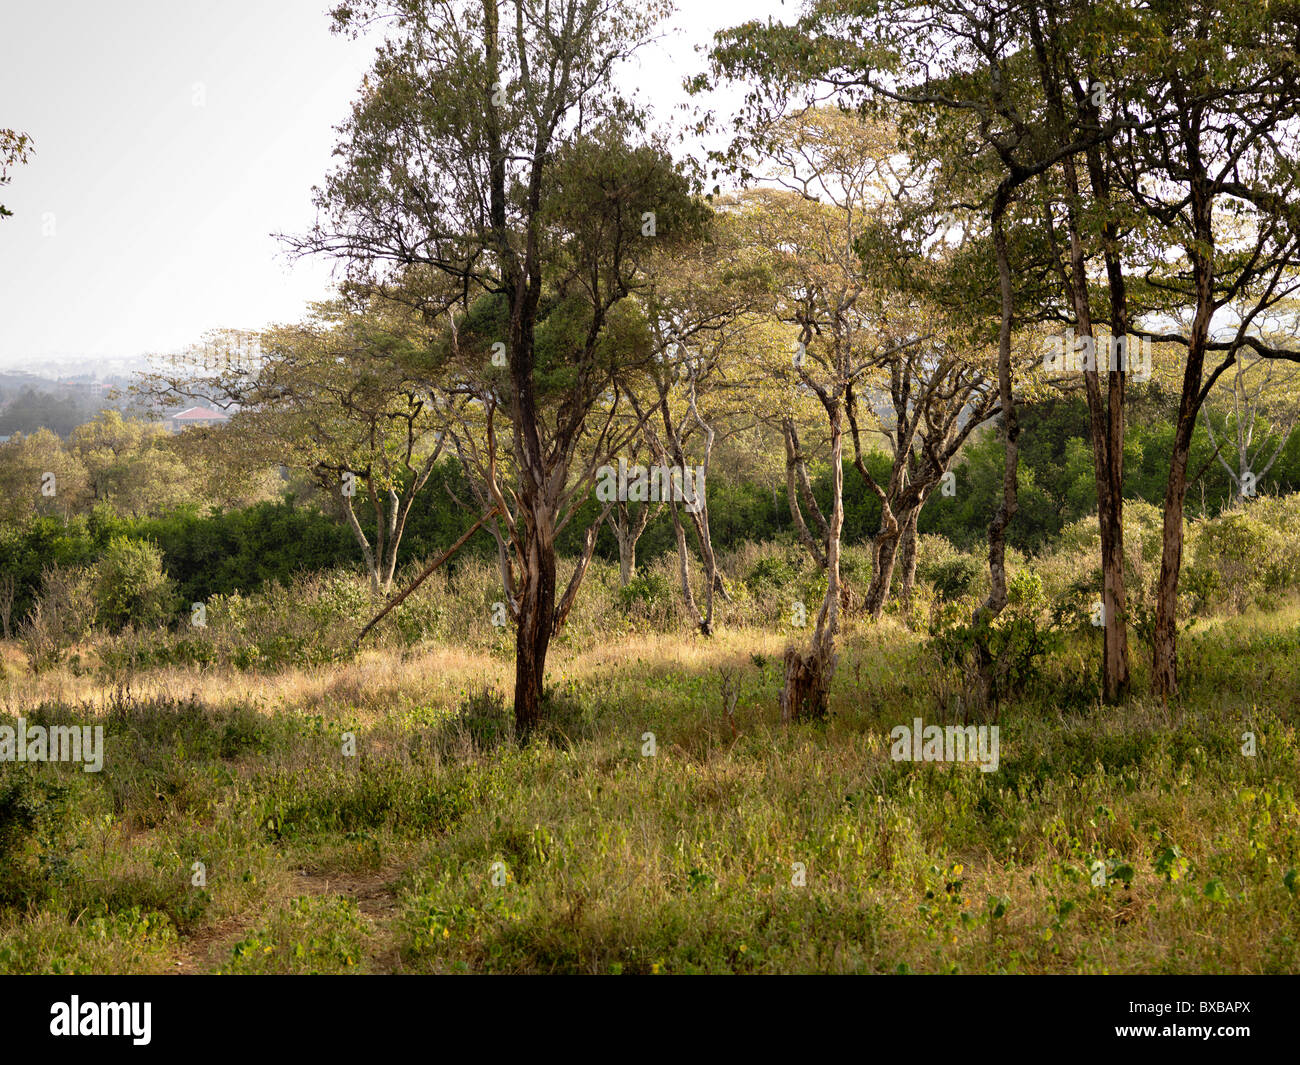 Kenya landscape Stock Photo